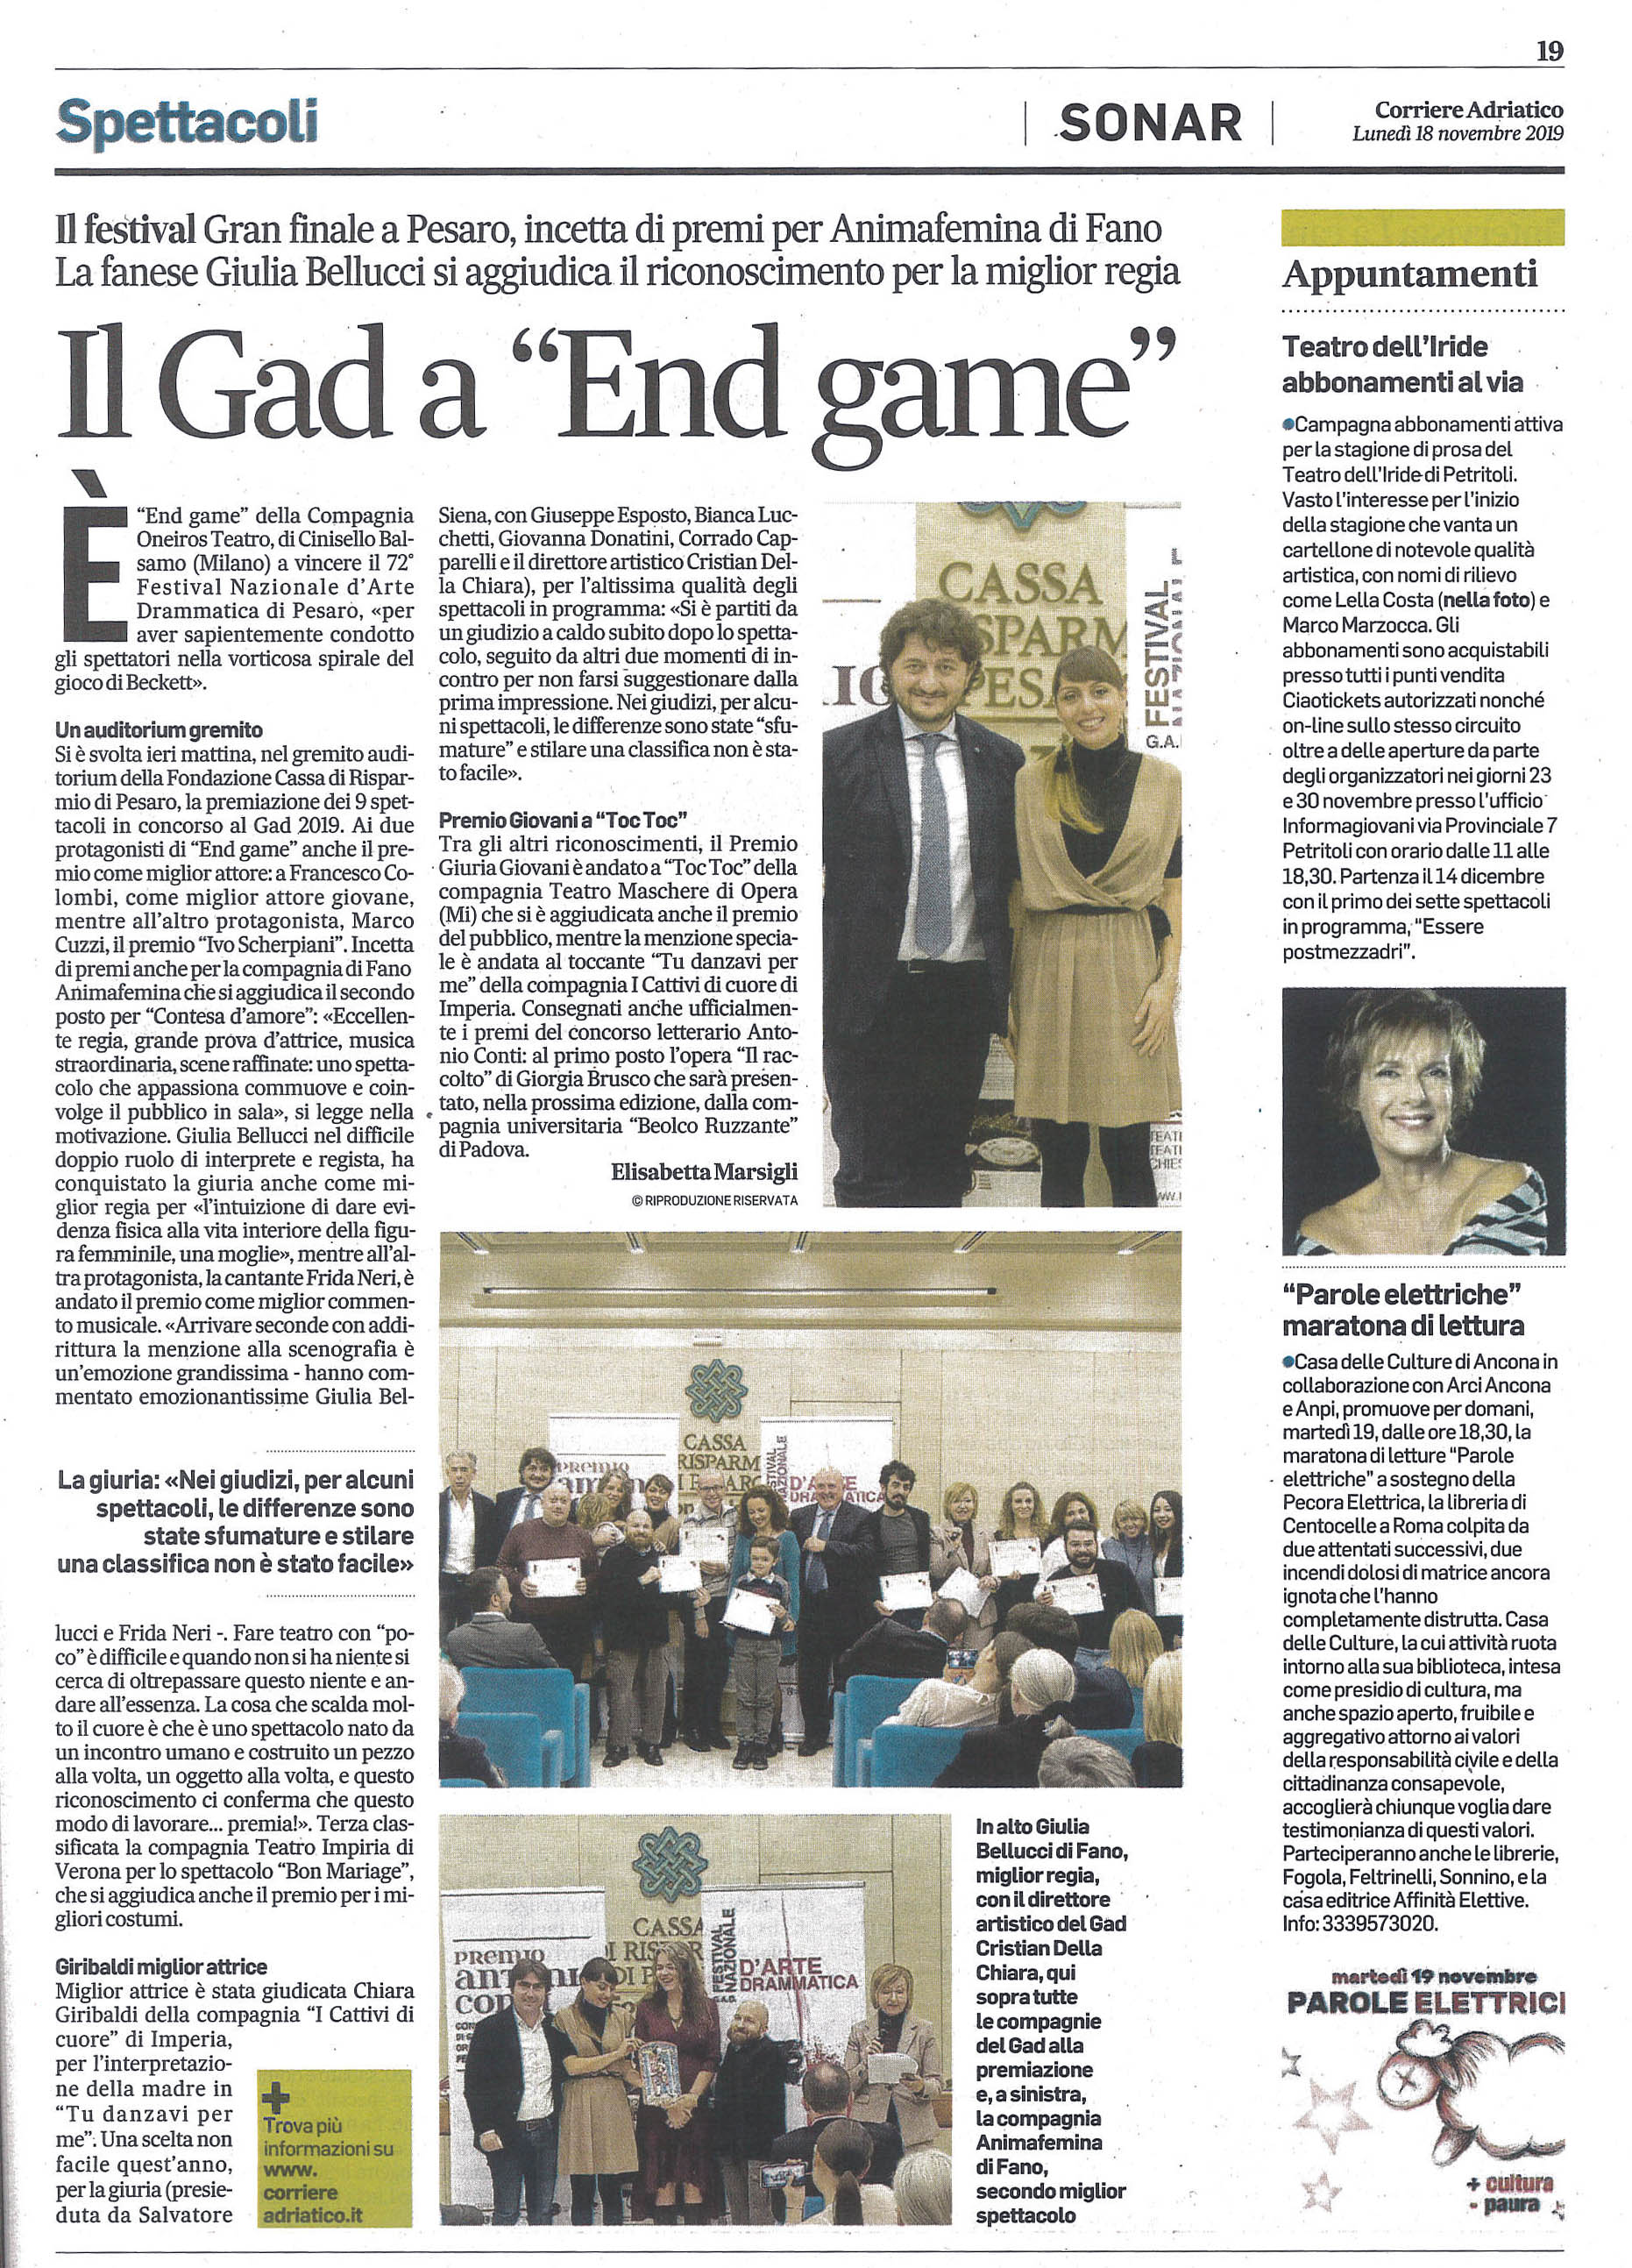 Corriere Adriatico 18 11 19